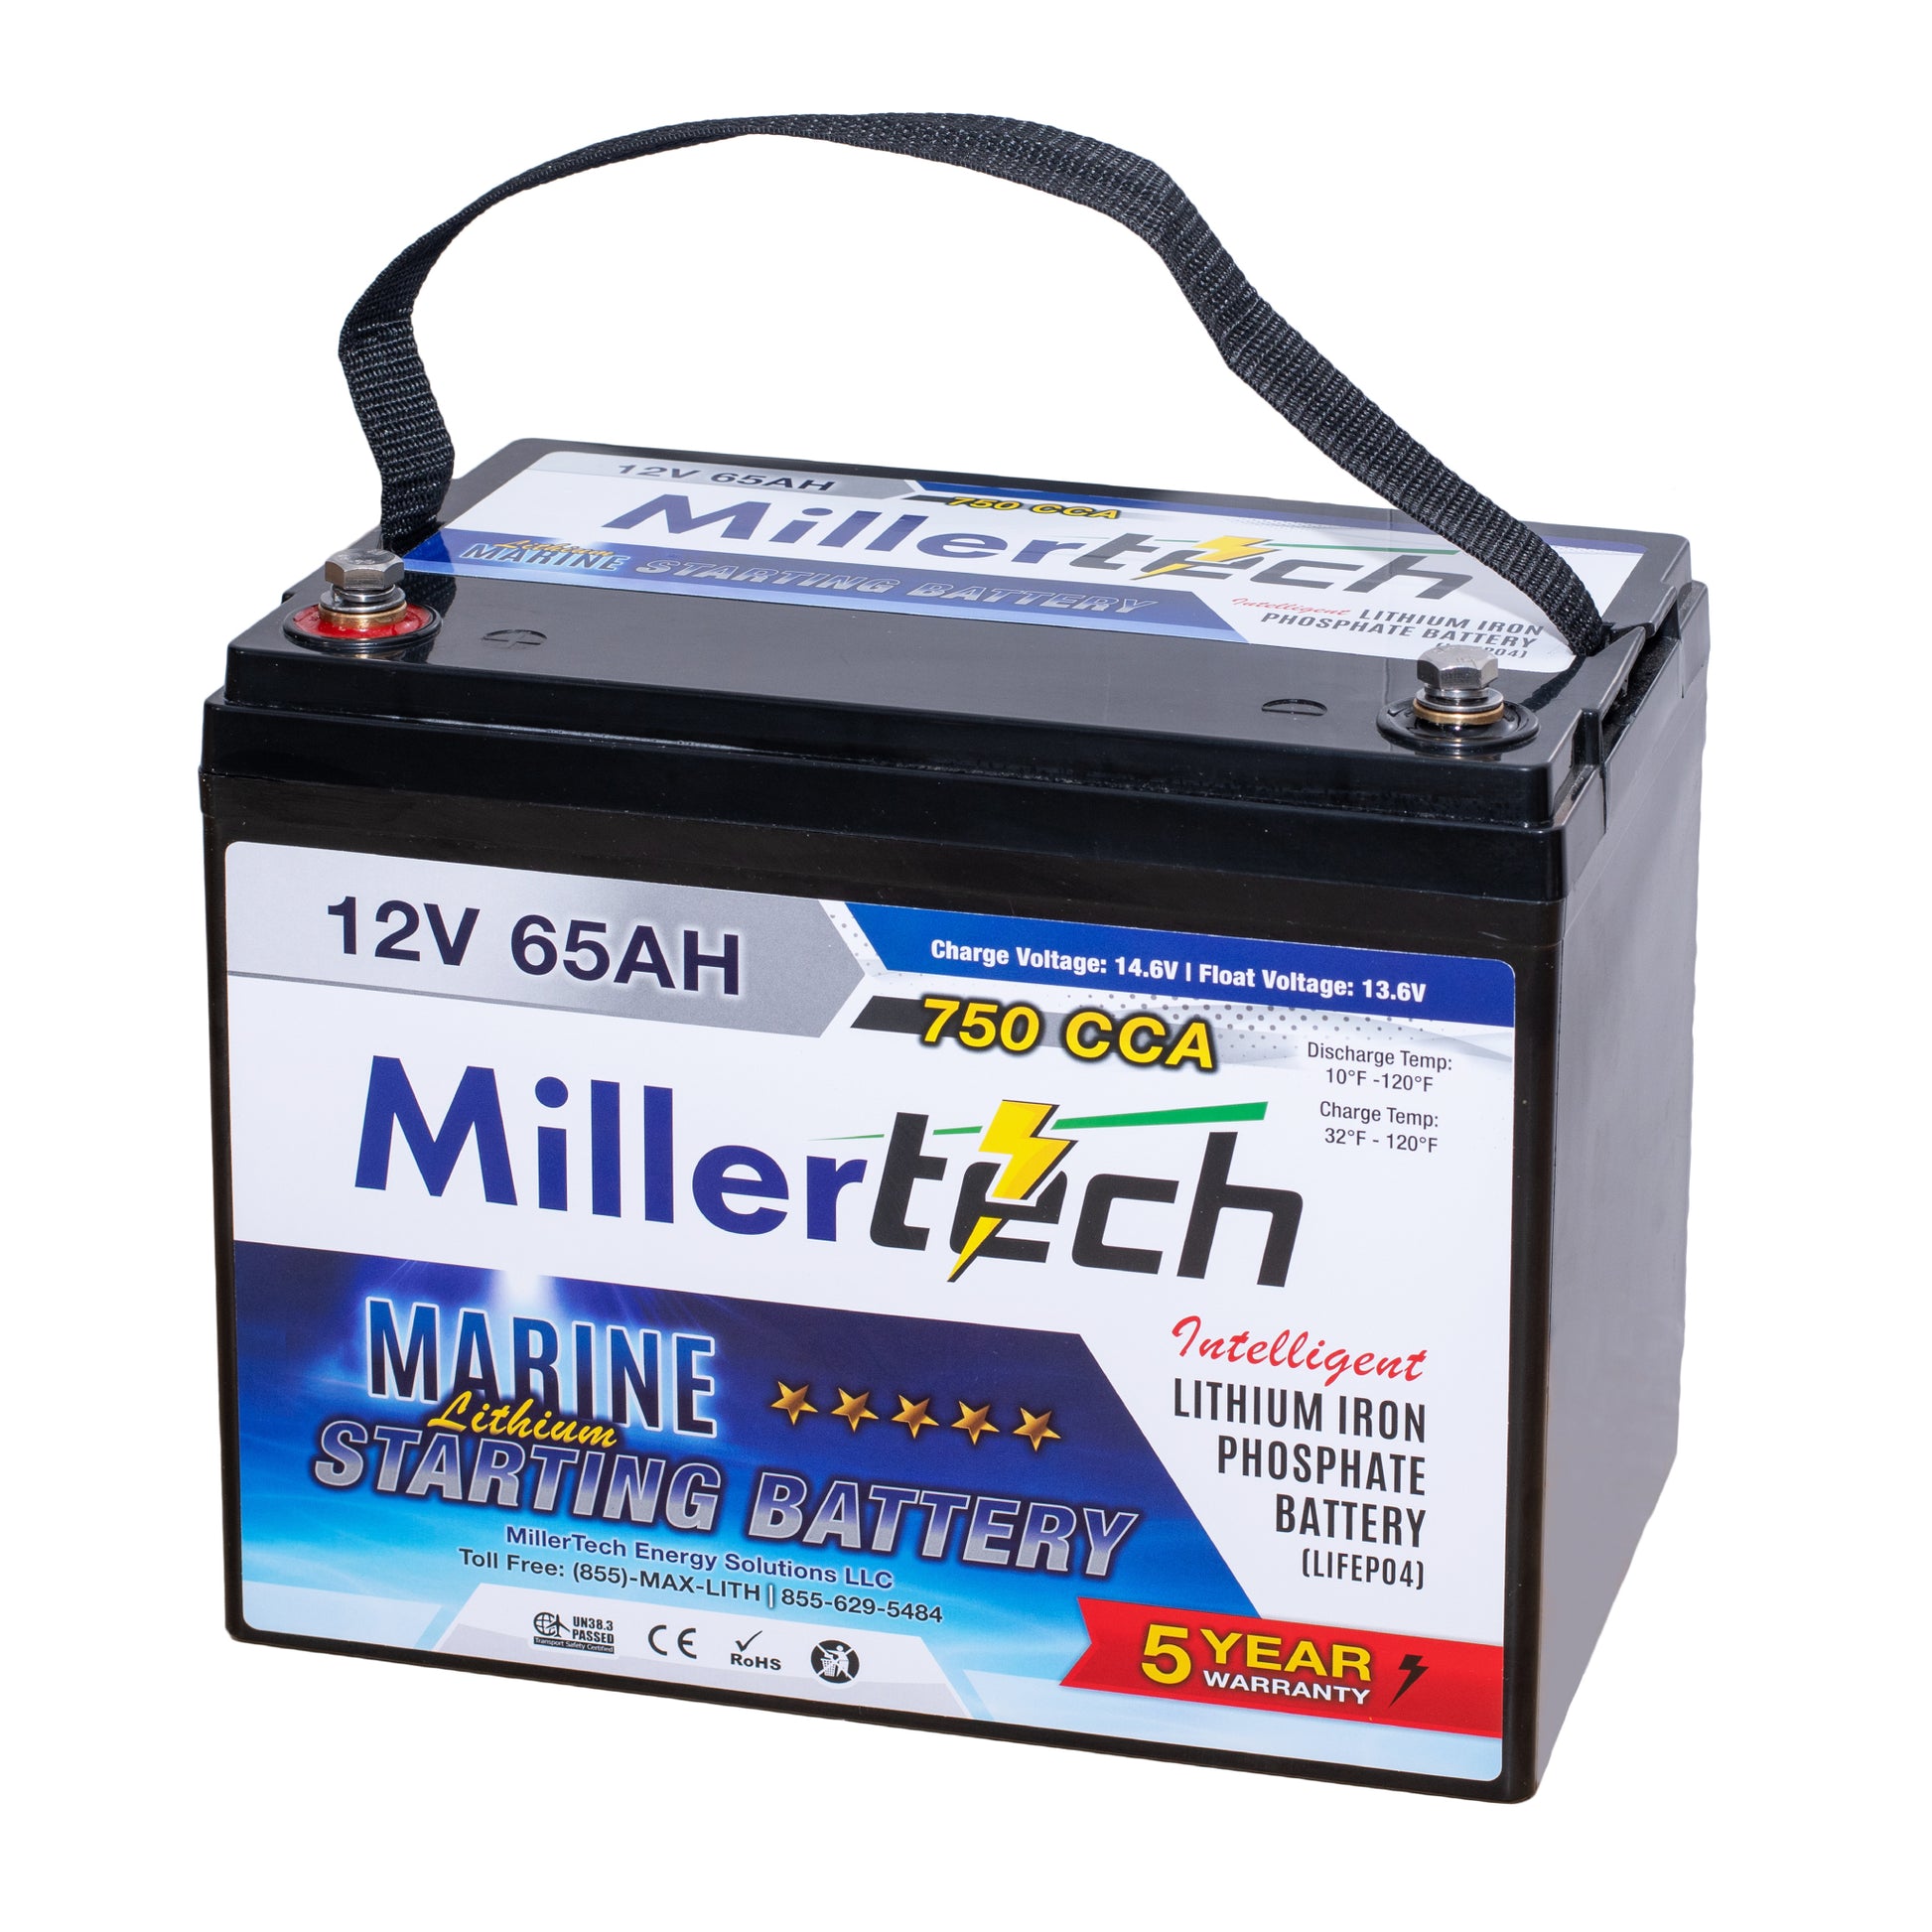 MillerTech 65Ah 12V 750CCA MARINE Lithium Iron Phosphate (LiFePO4